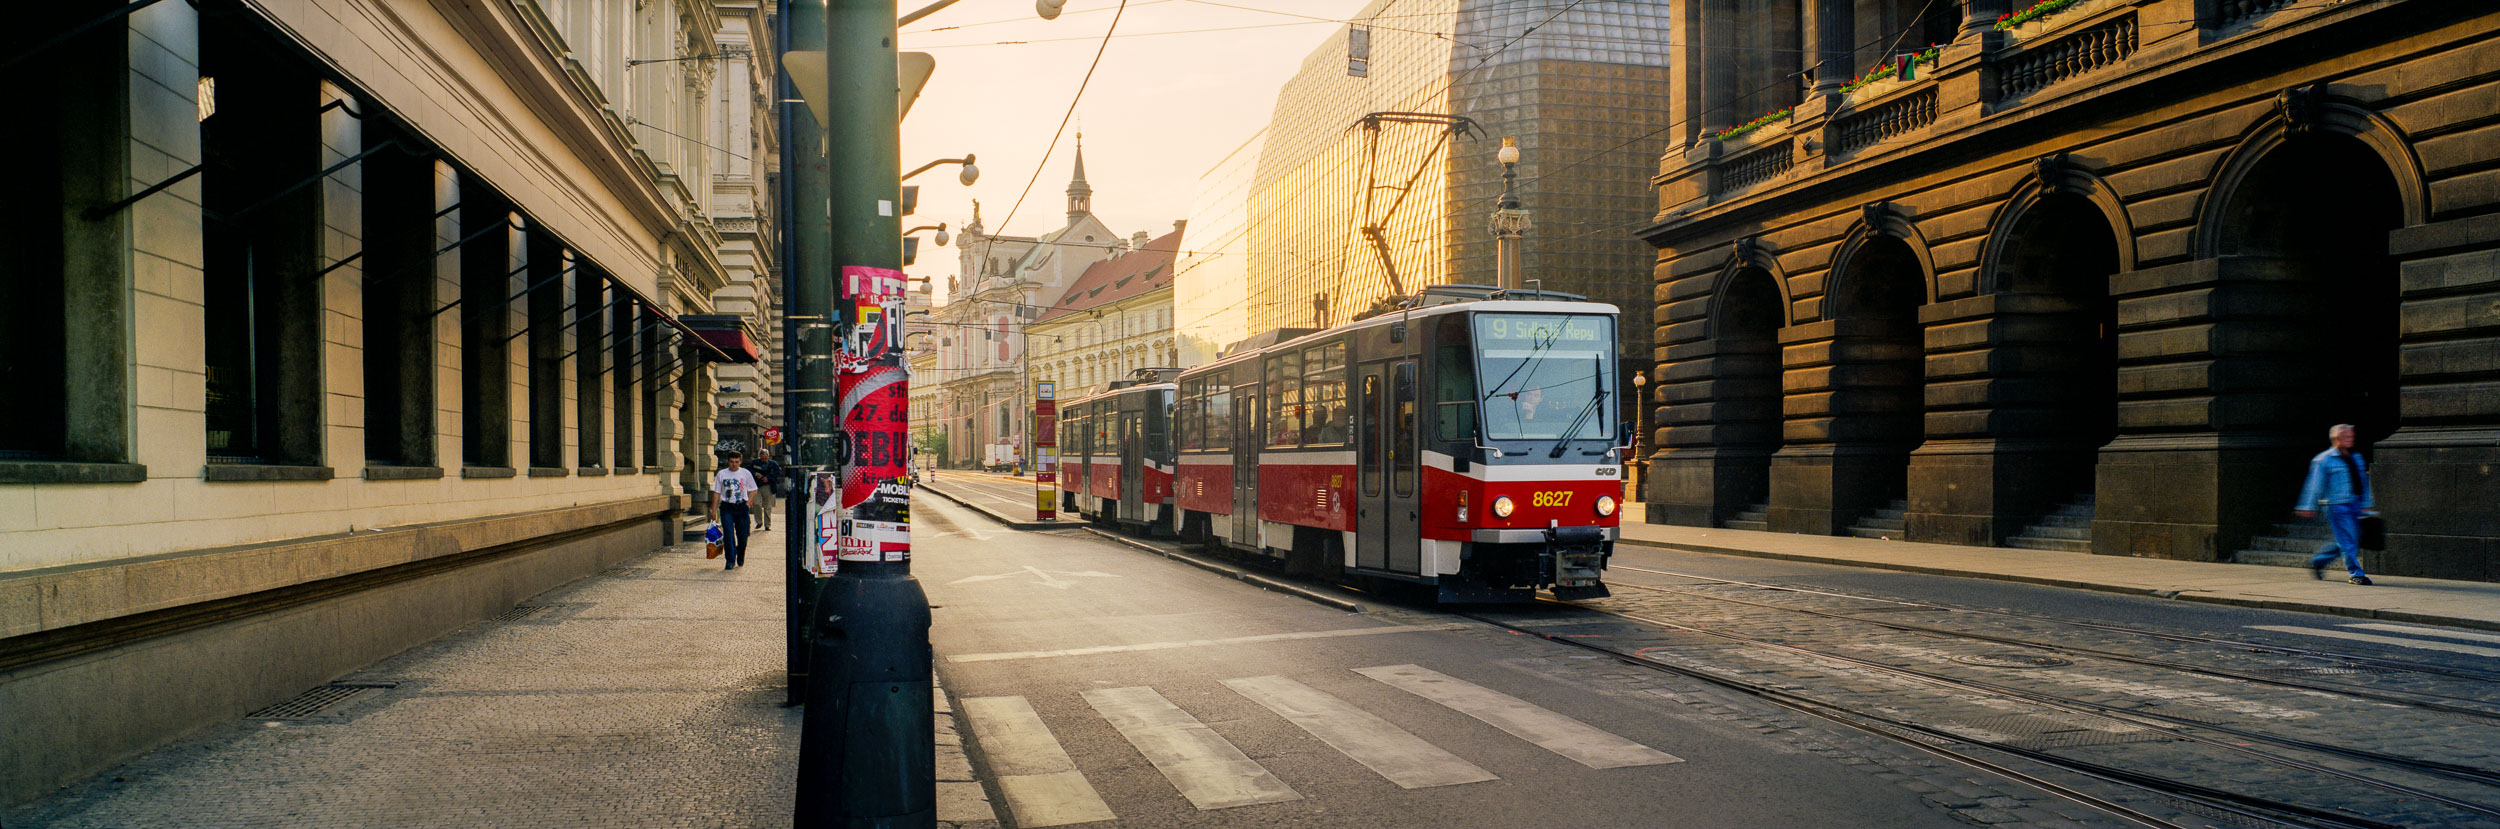 Streetcar, Prague